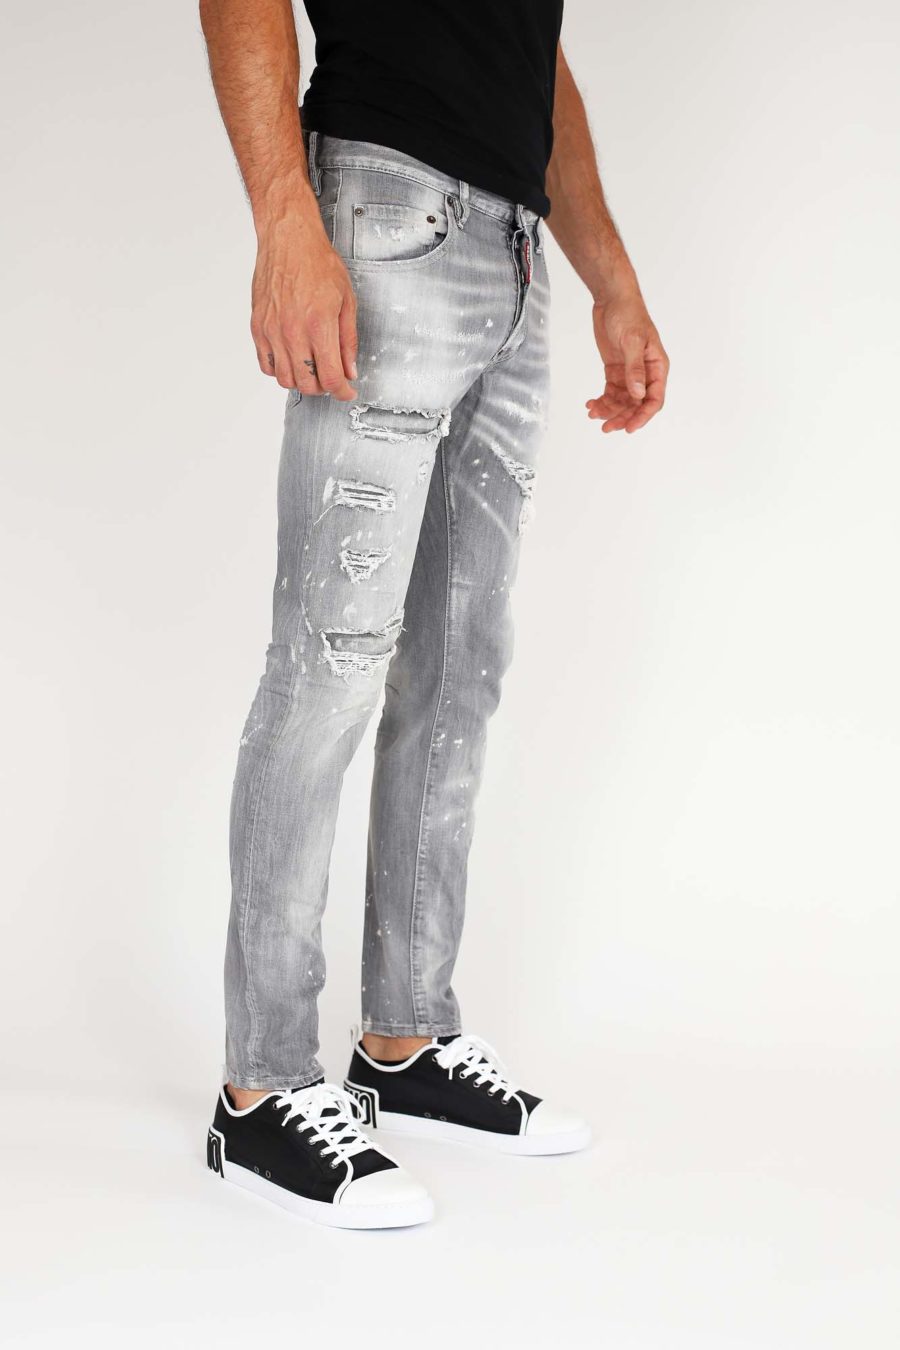 Skater"-Jeans grau abgenutzt - IMG 9823